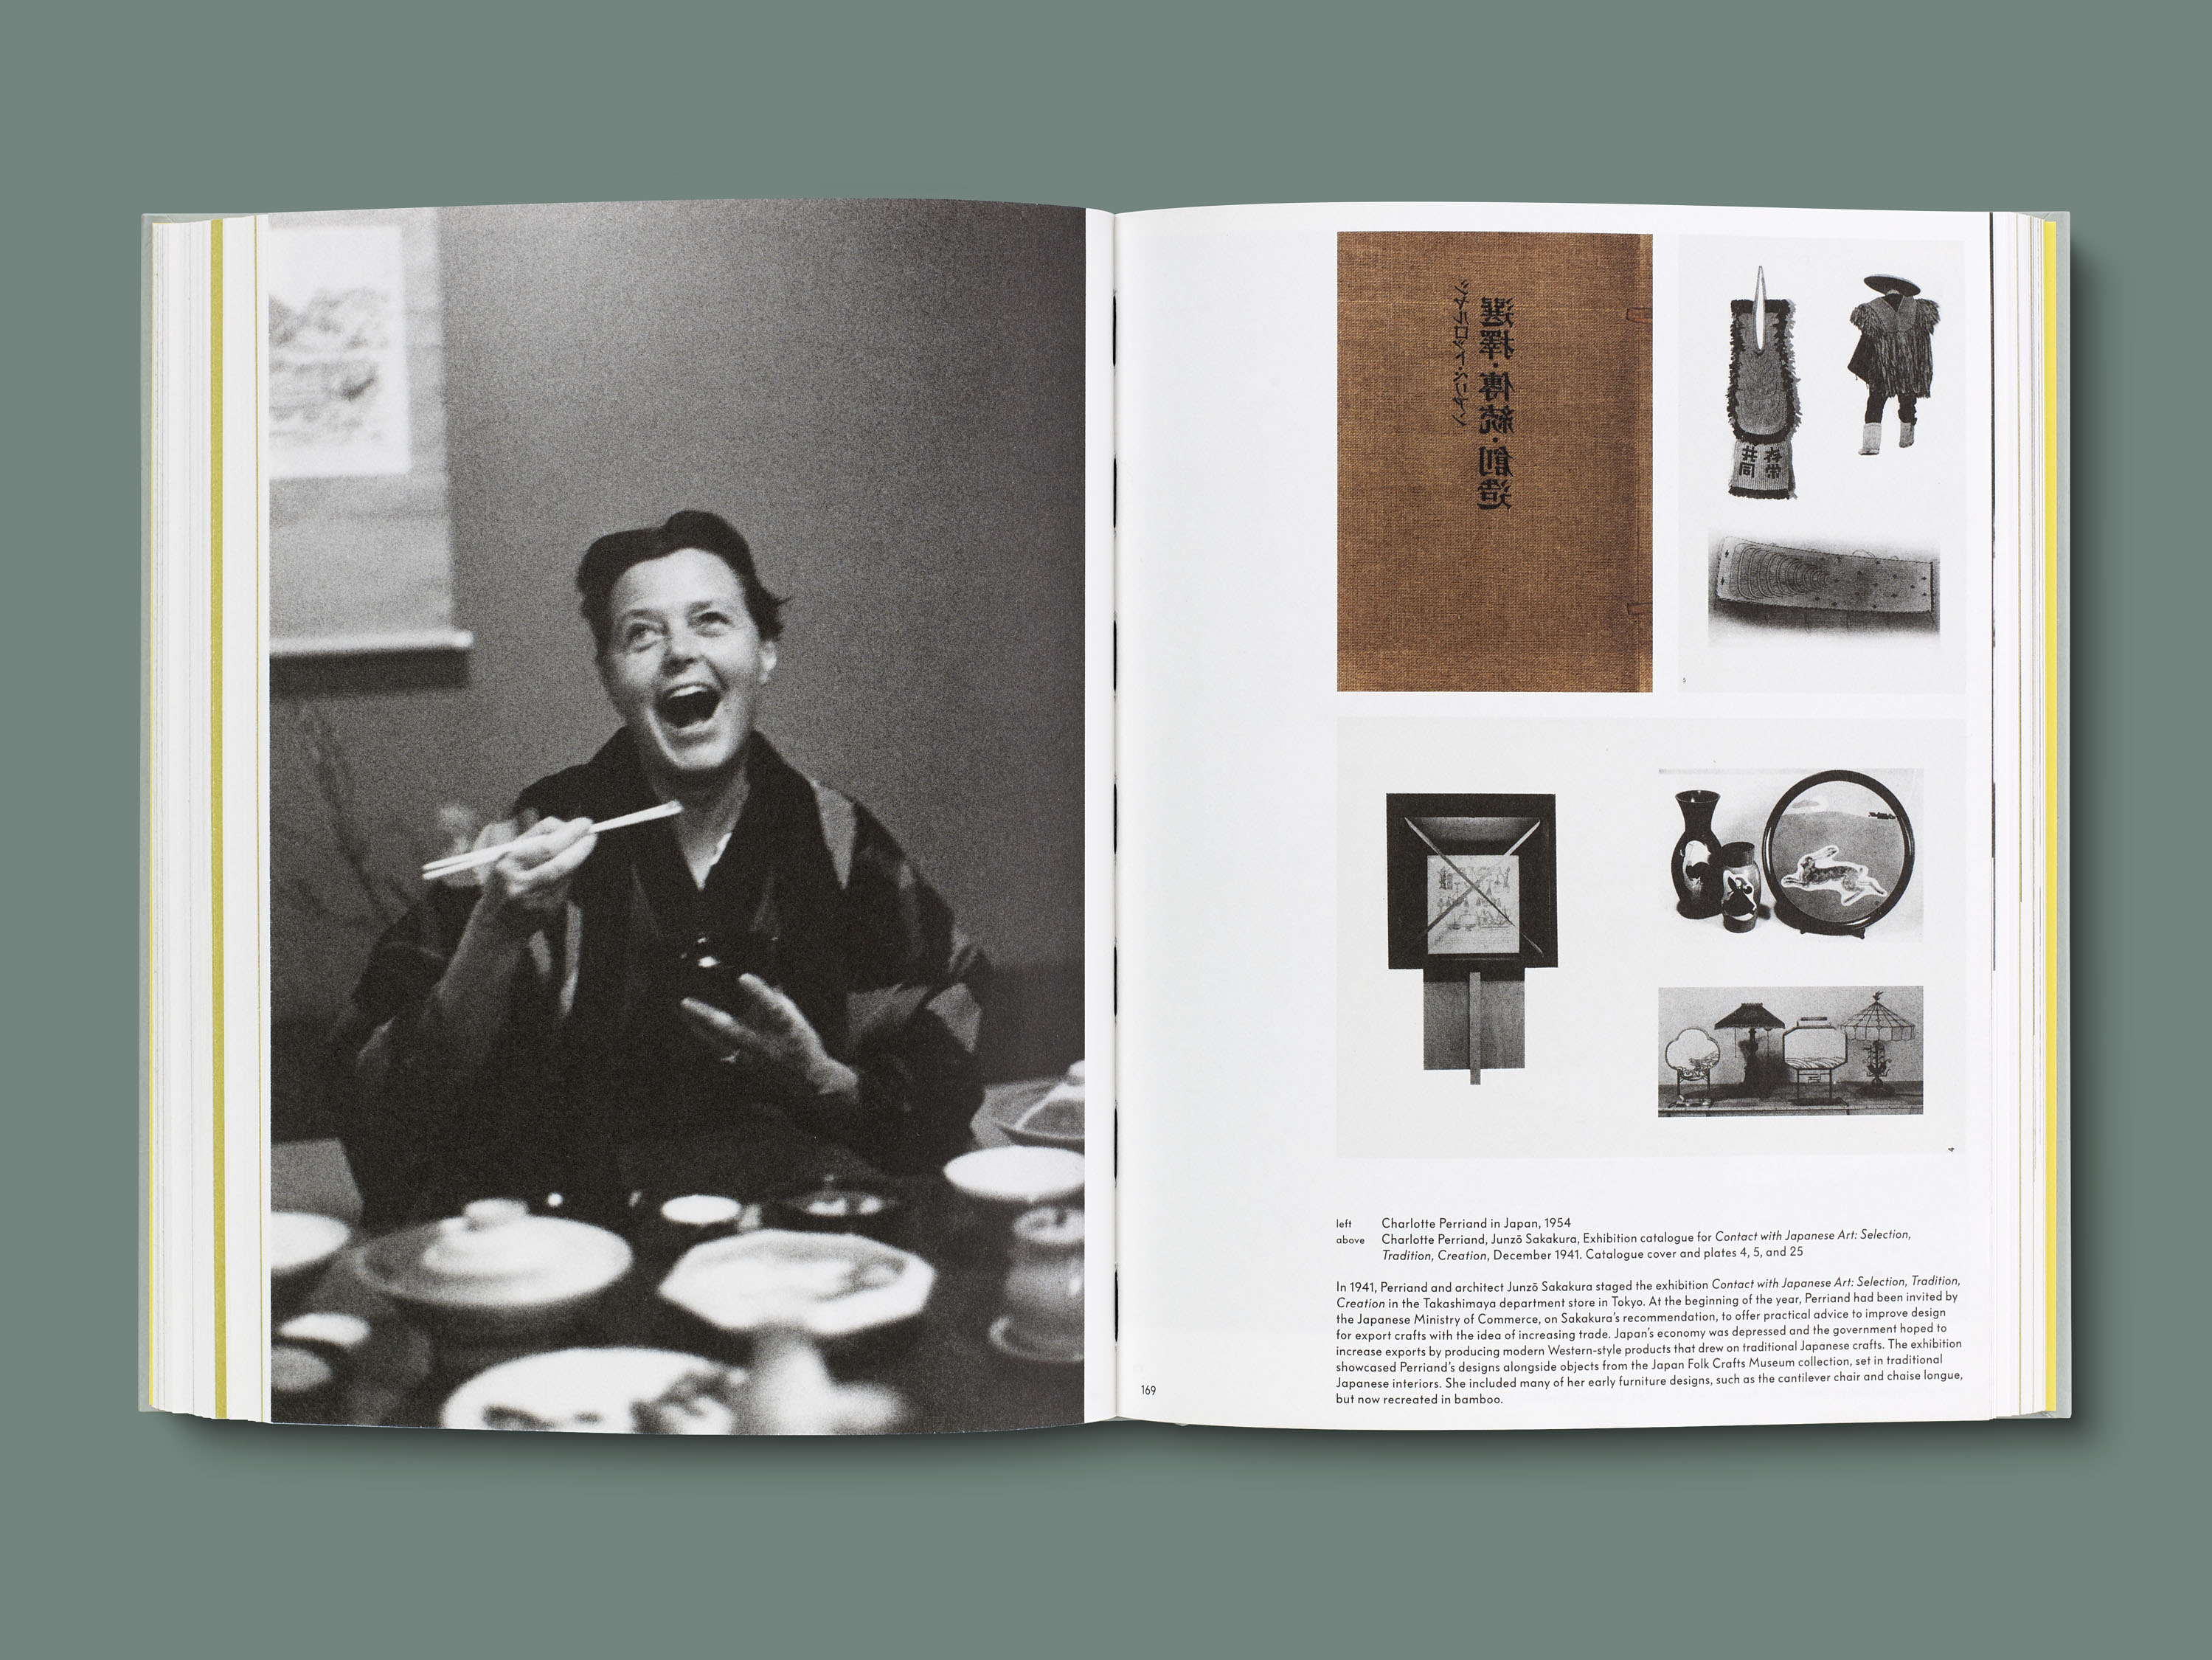 Charlotte Perriand: Celebrating A Modernist's Legacy - Modern Magazine